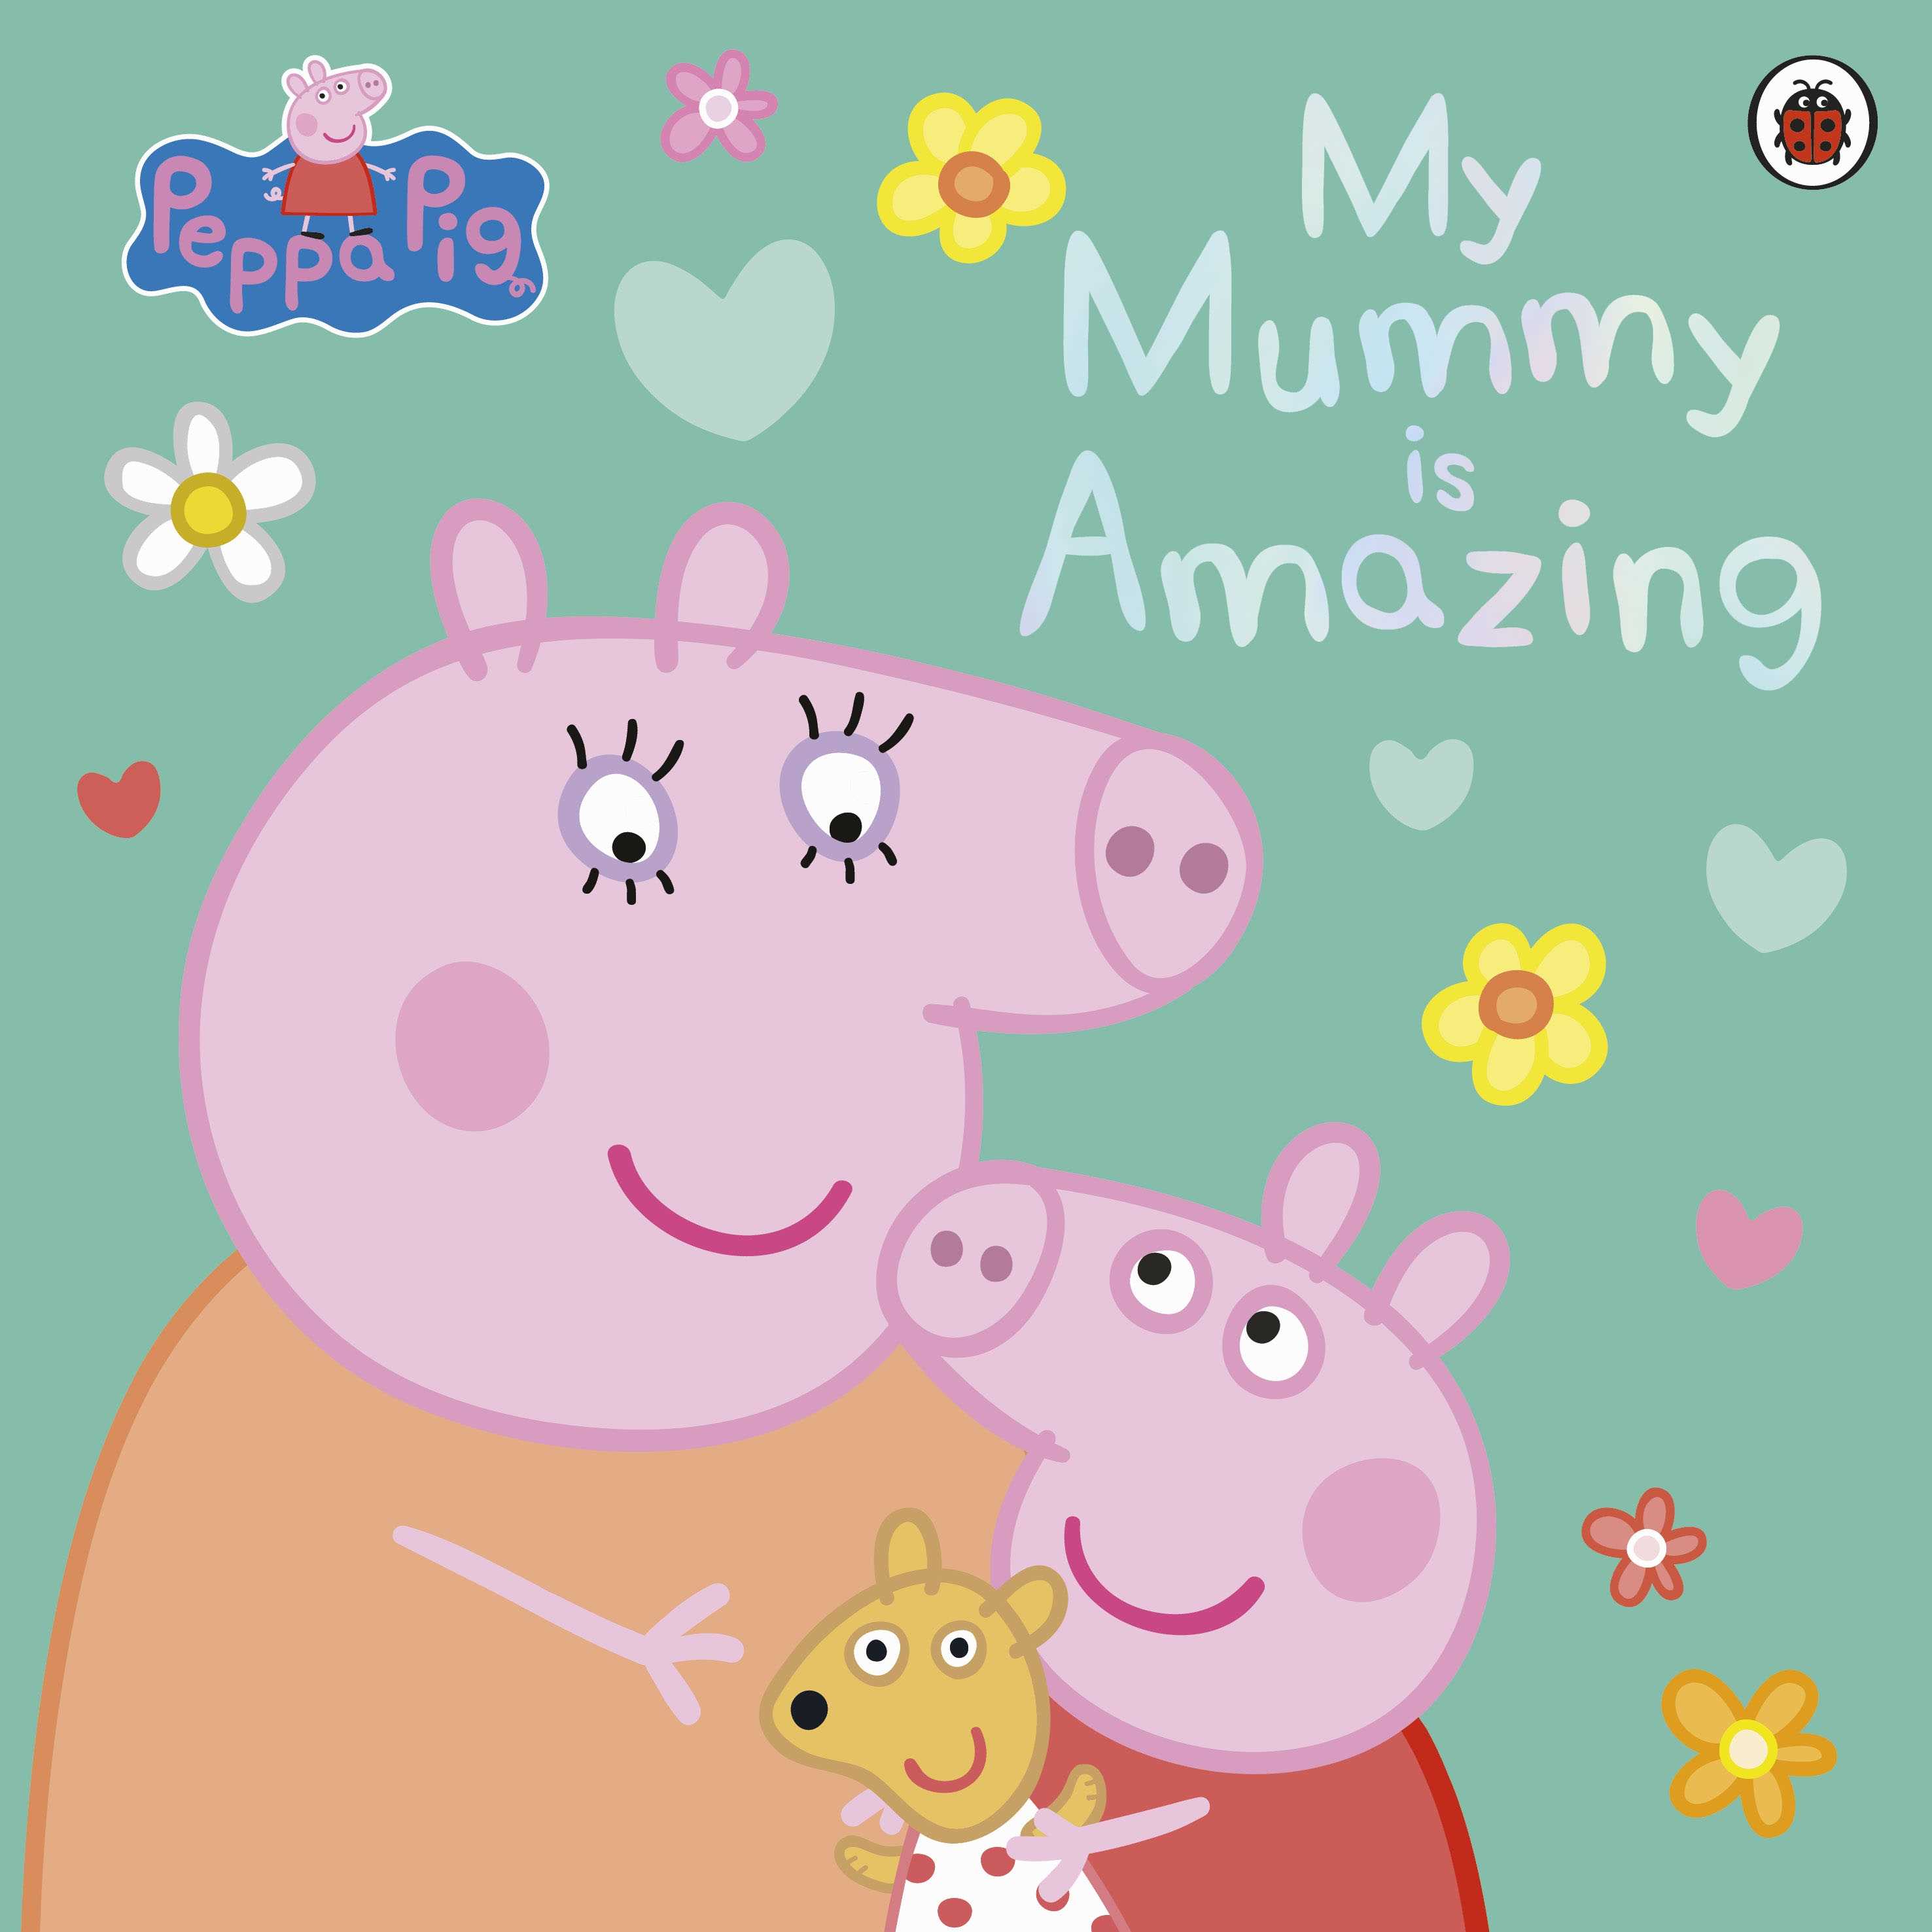 My Mummy is Amazing (Peppa Pig)